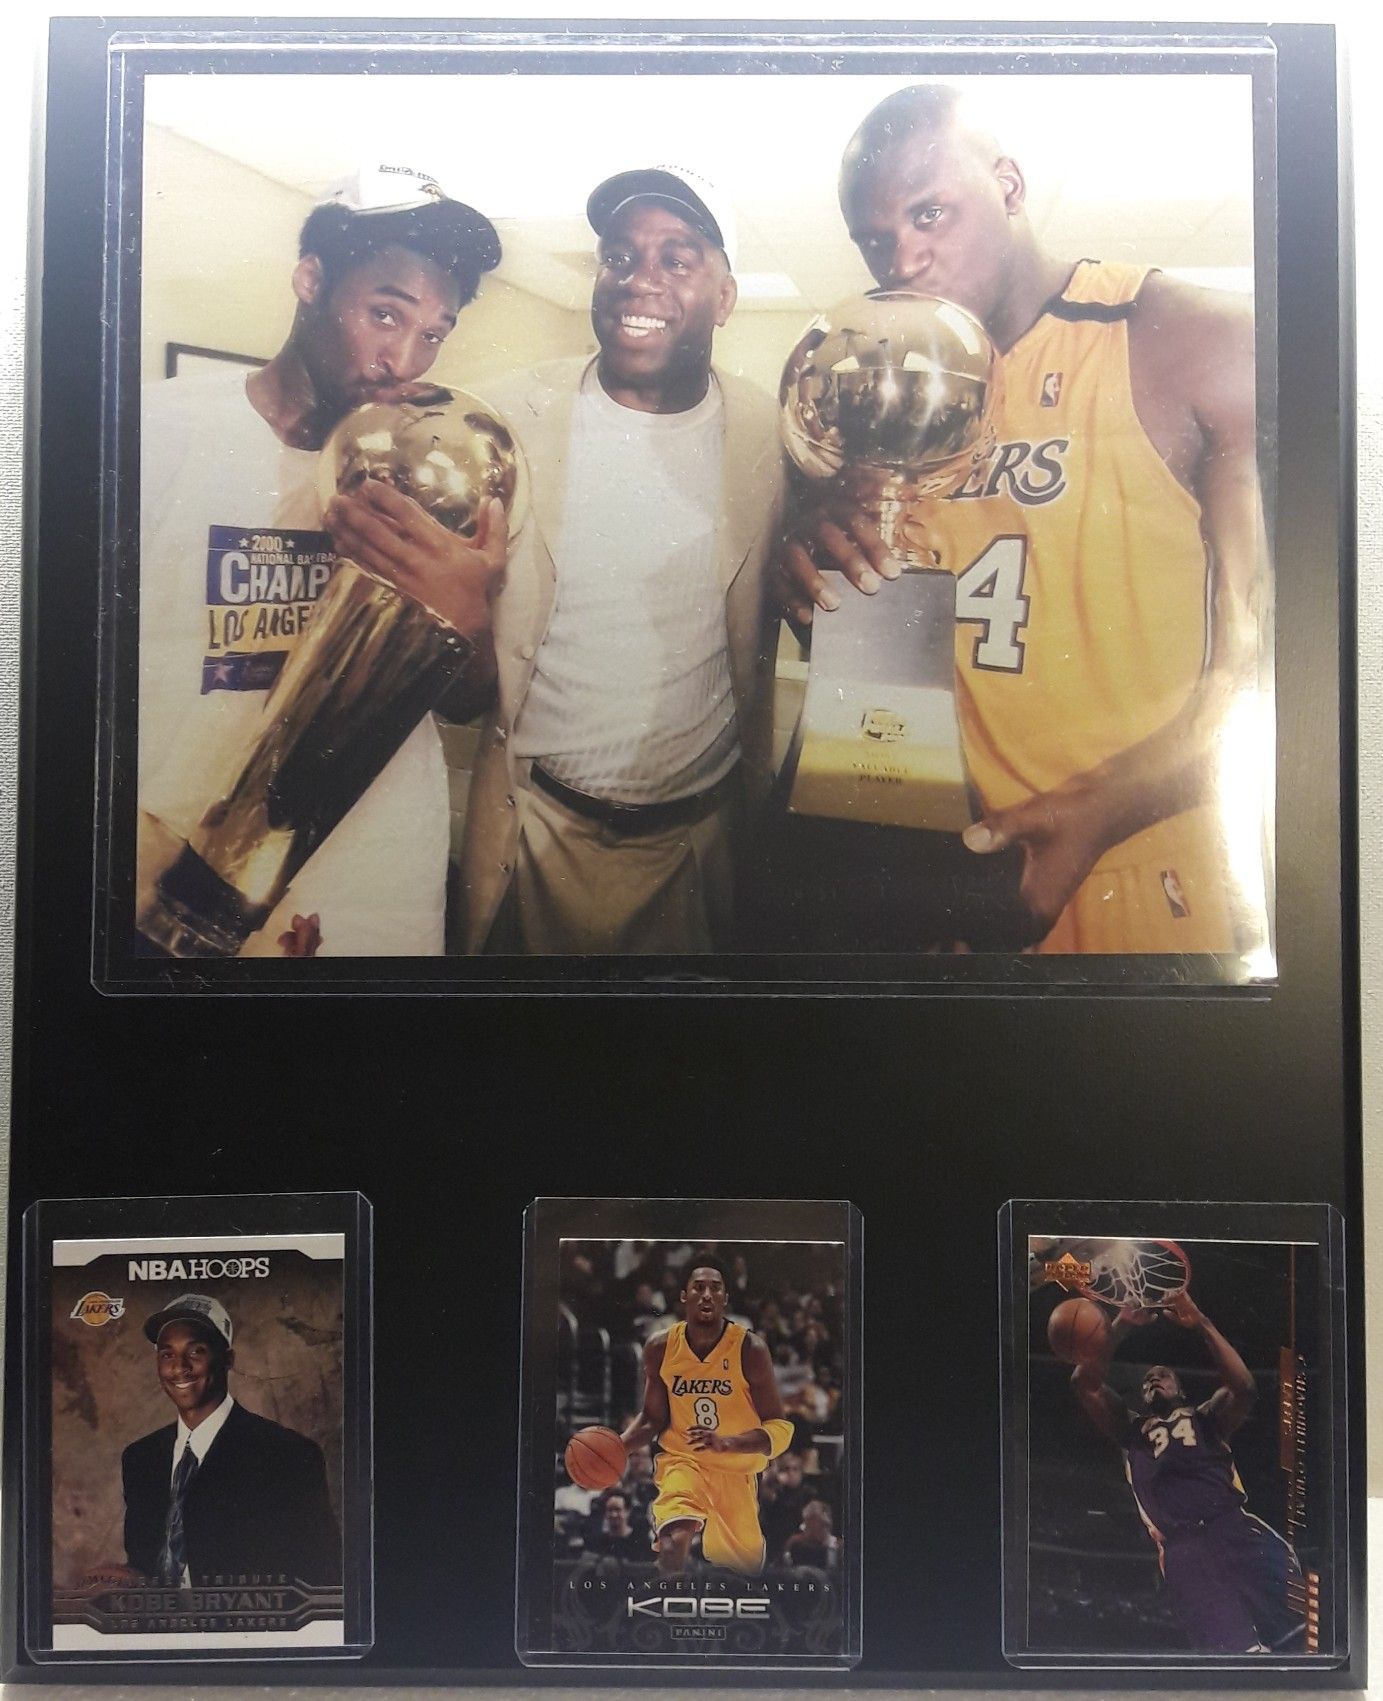 Kobe Bryant and shaq plaque